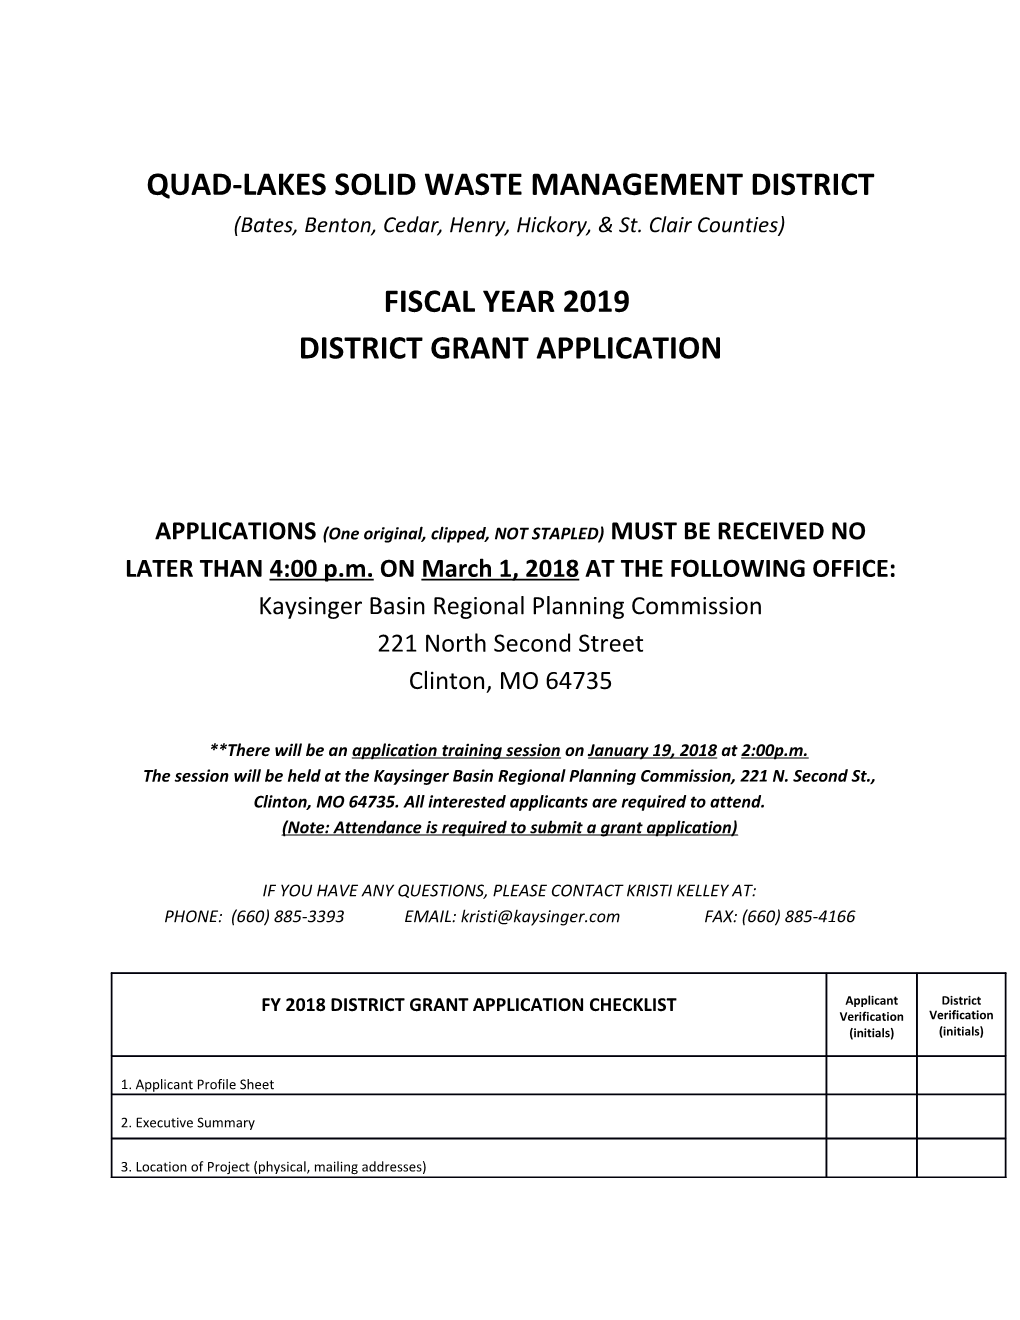 Quad-Lakes Solid Waste Management District